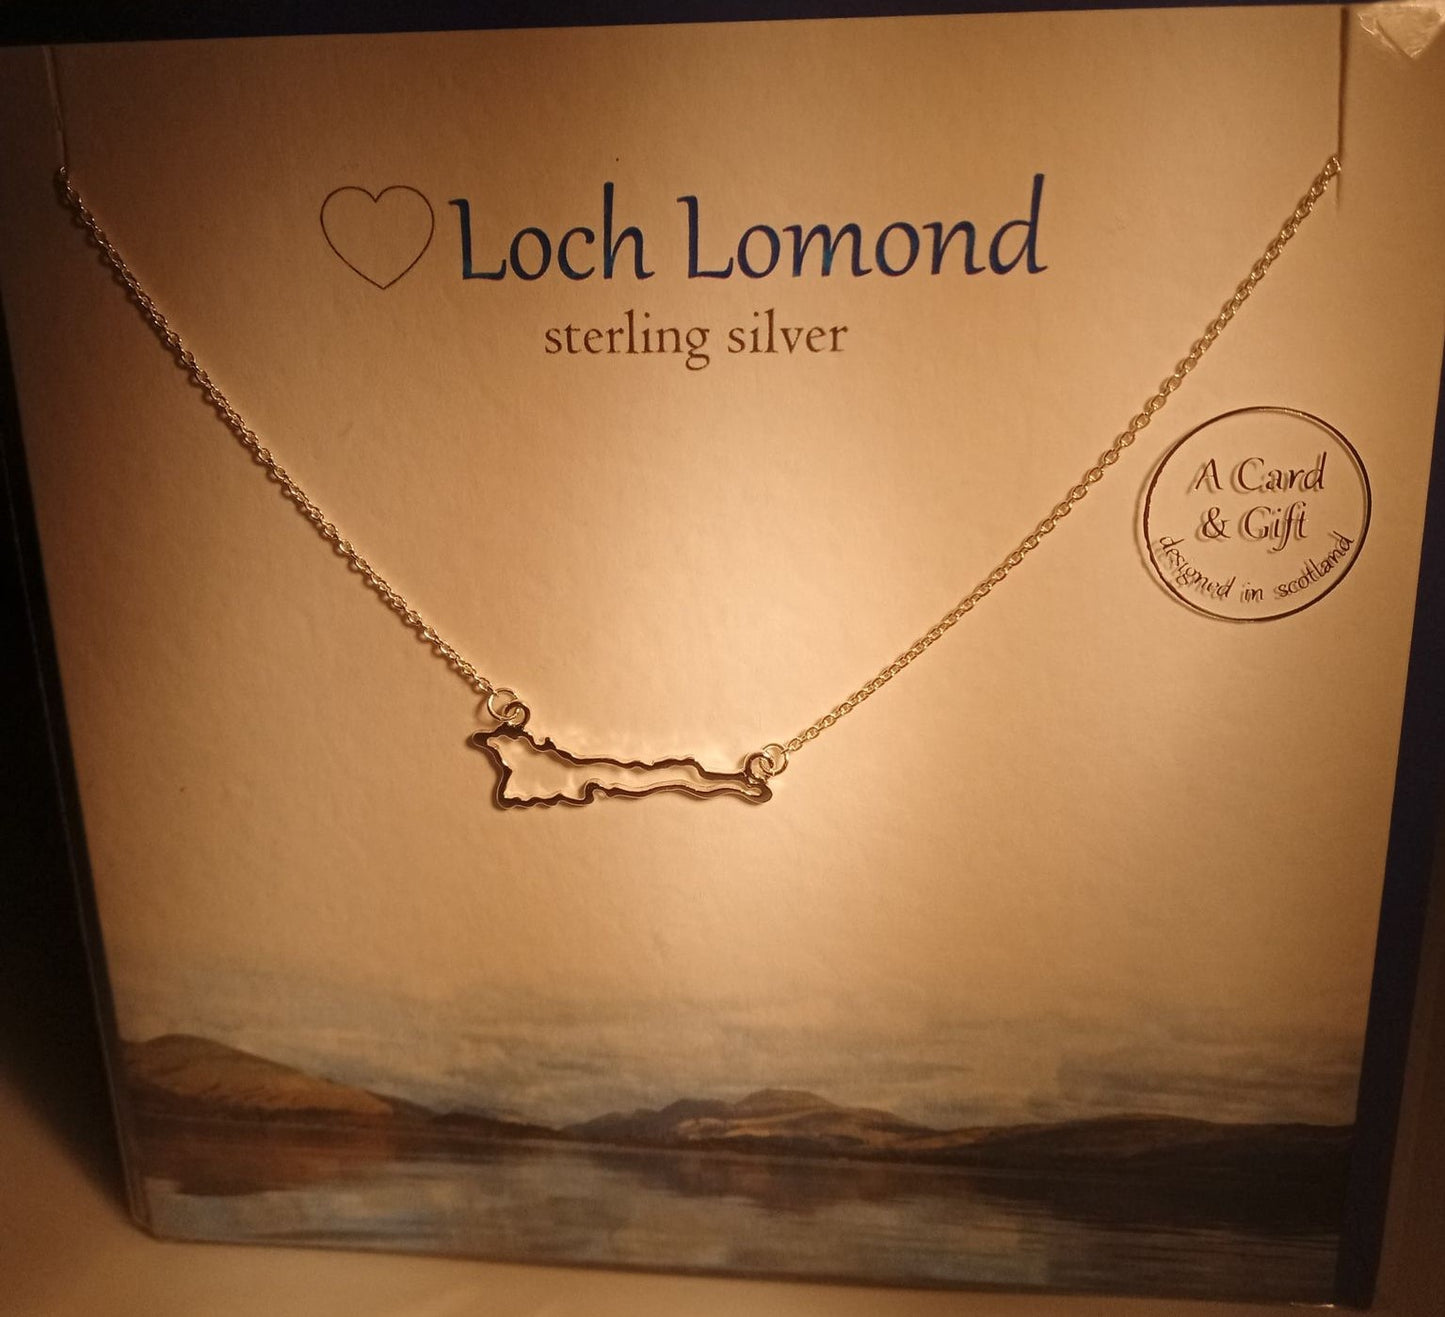 Loch Lomond sterling silver necklace